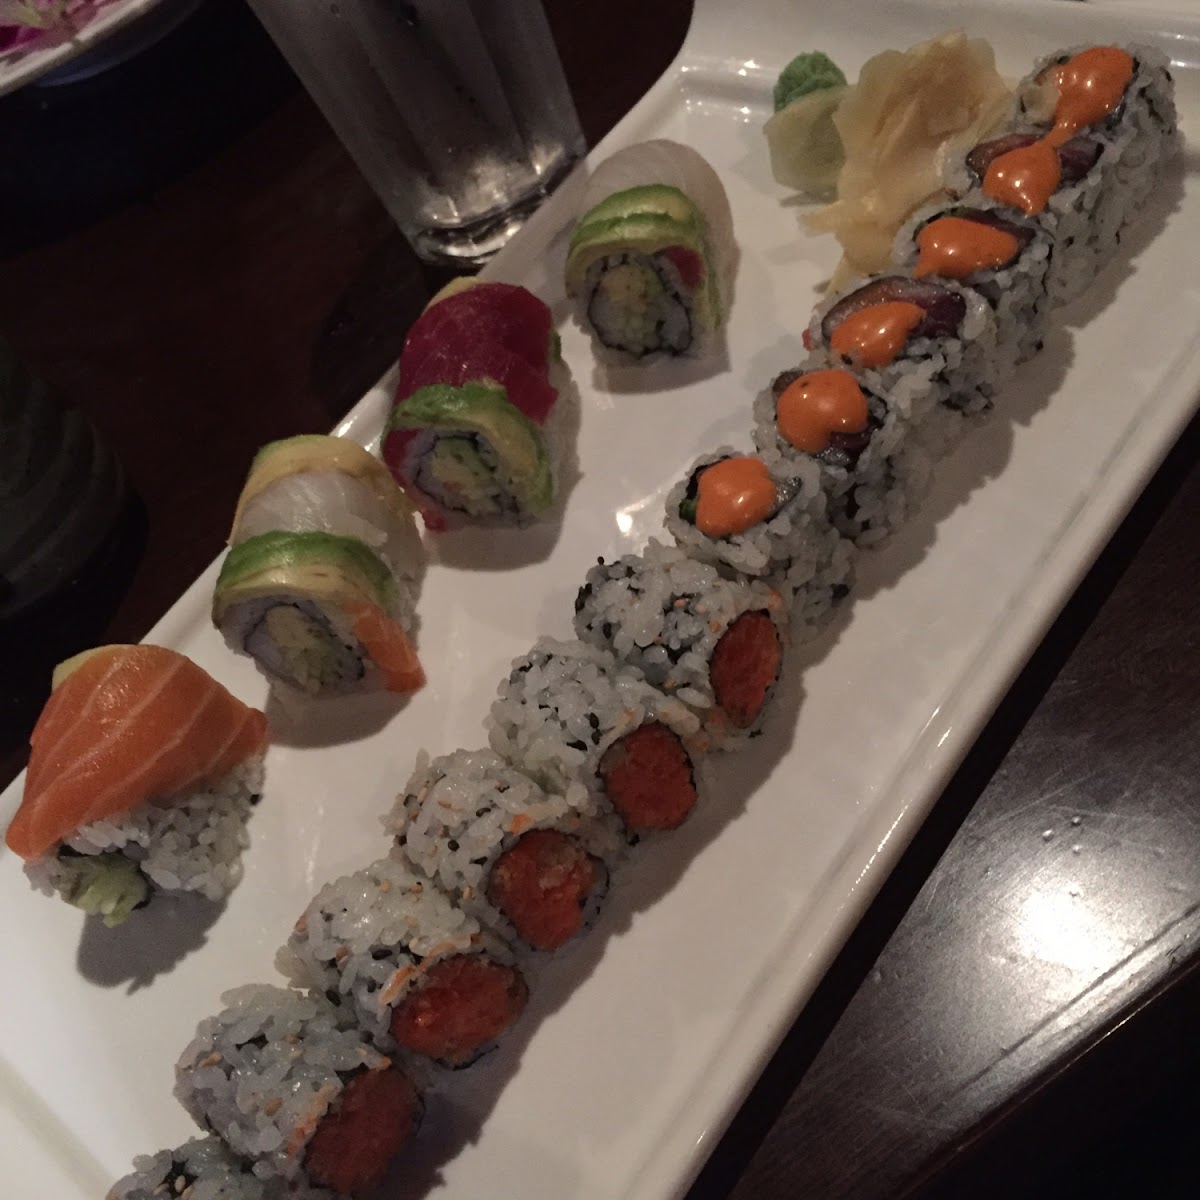 Monday night is half-price sushi